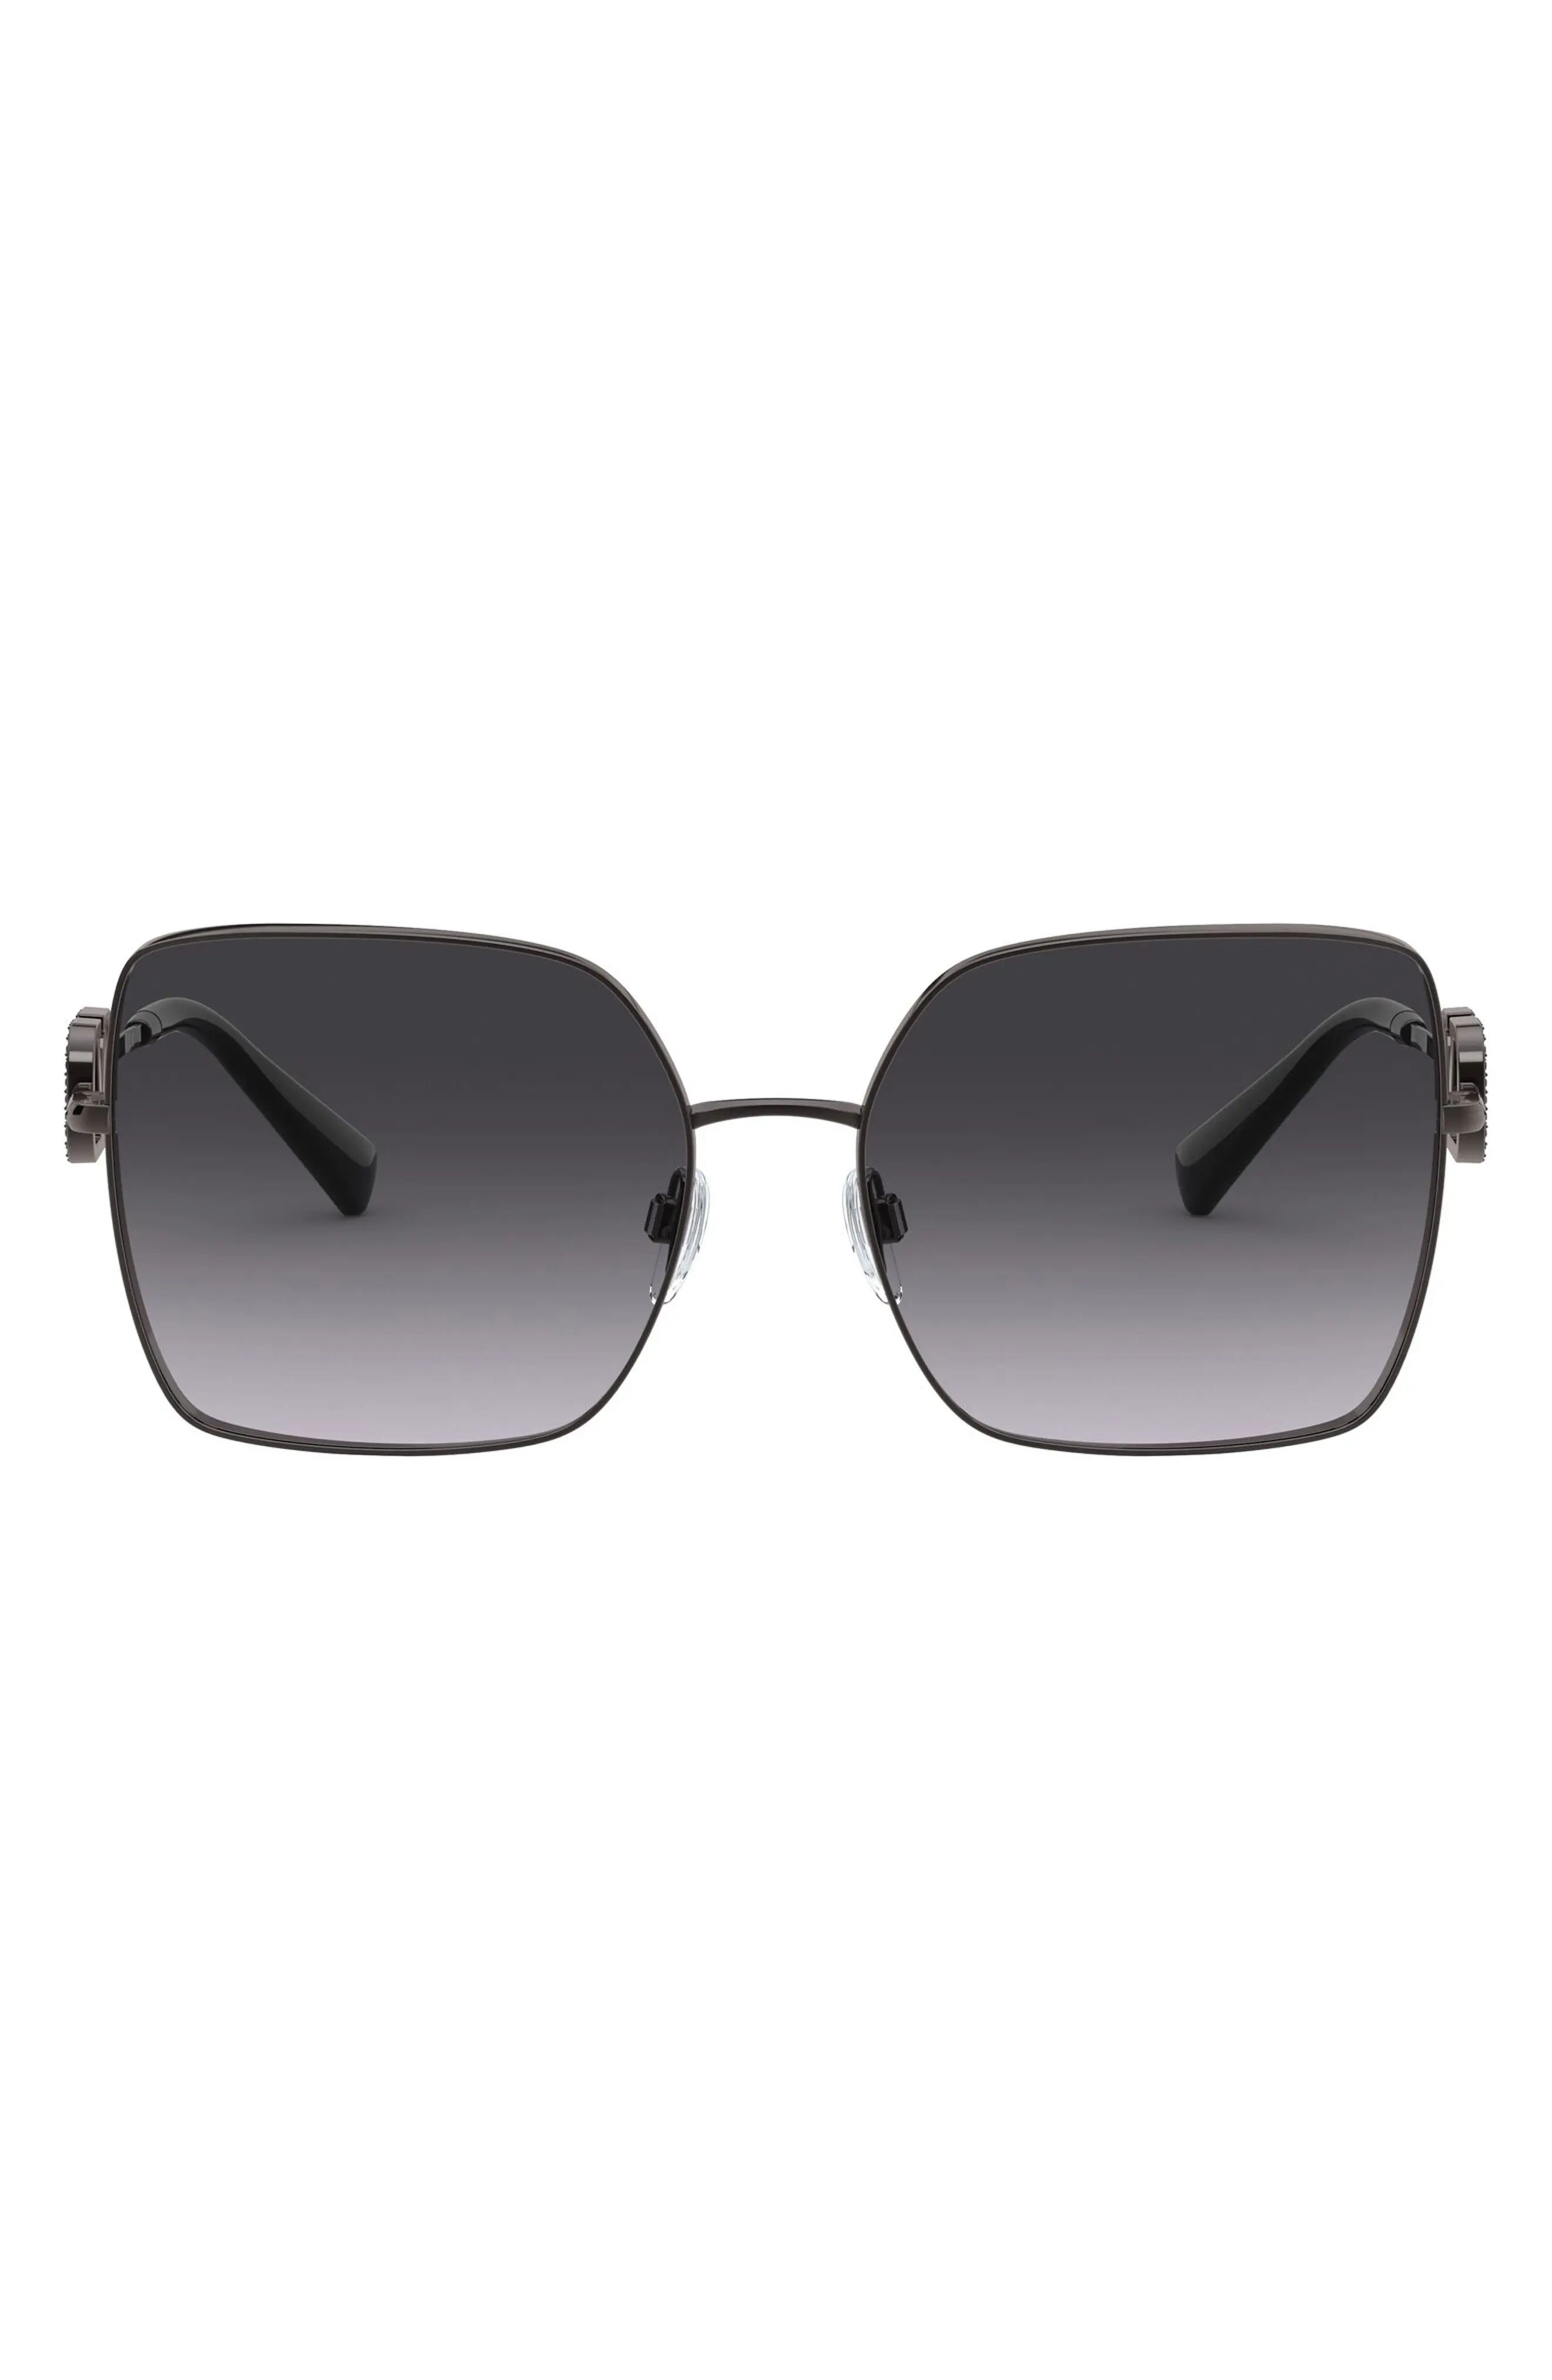 Valentino 59mm Gradient Square Sunglasses in Gunmetal/Black Gradient at Nordstrom | Nordstrom